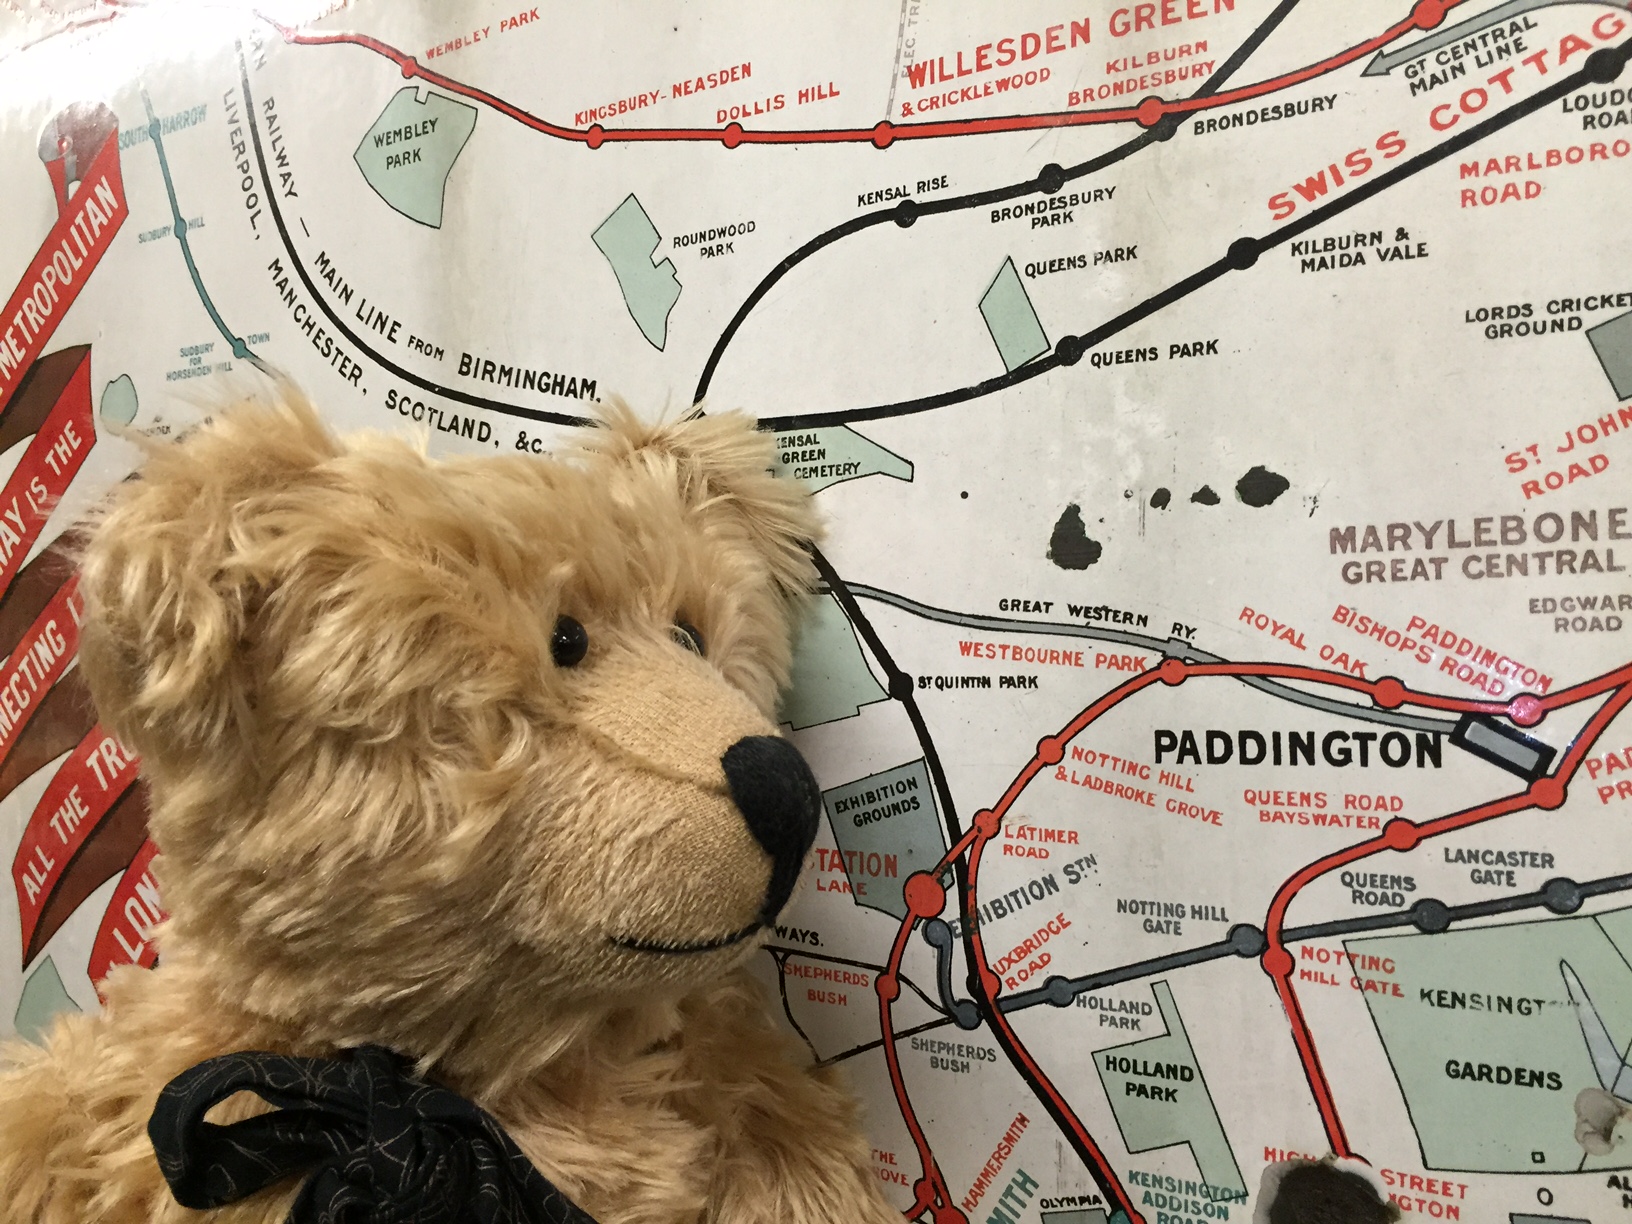 London Transport Museum: Found Paddington!